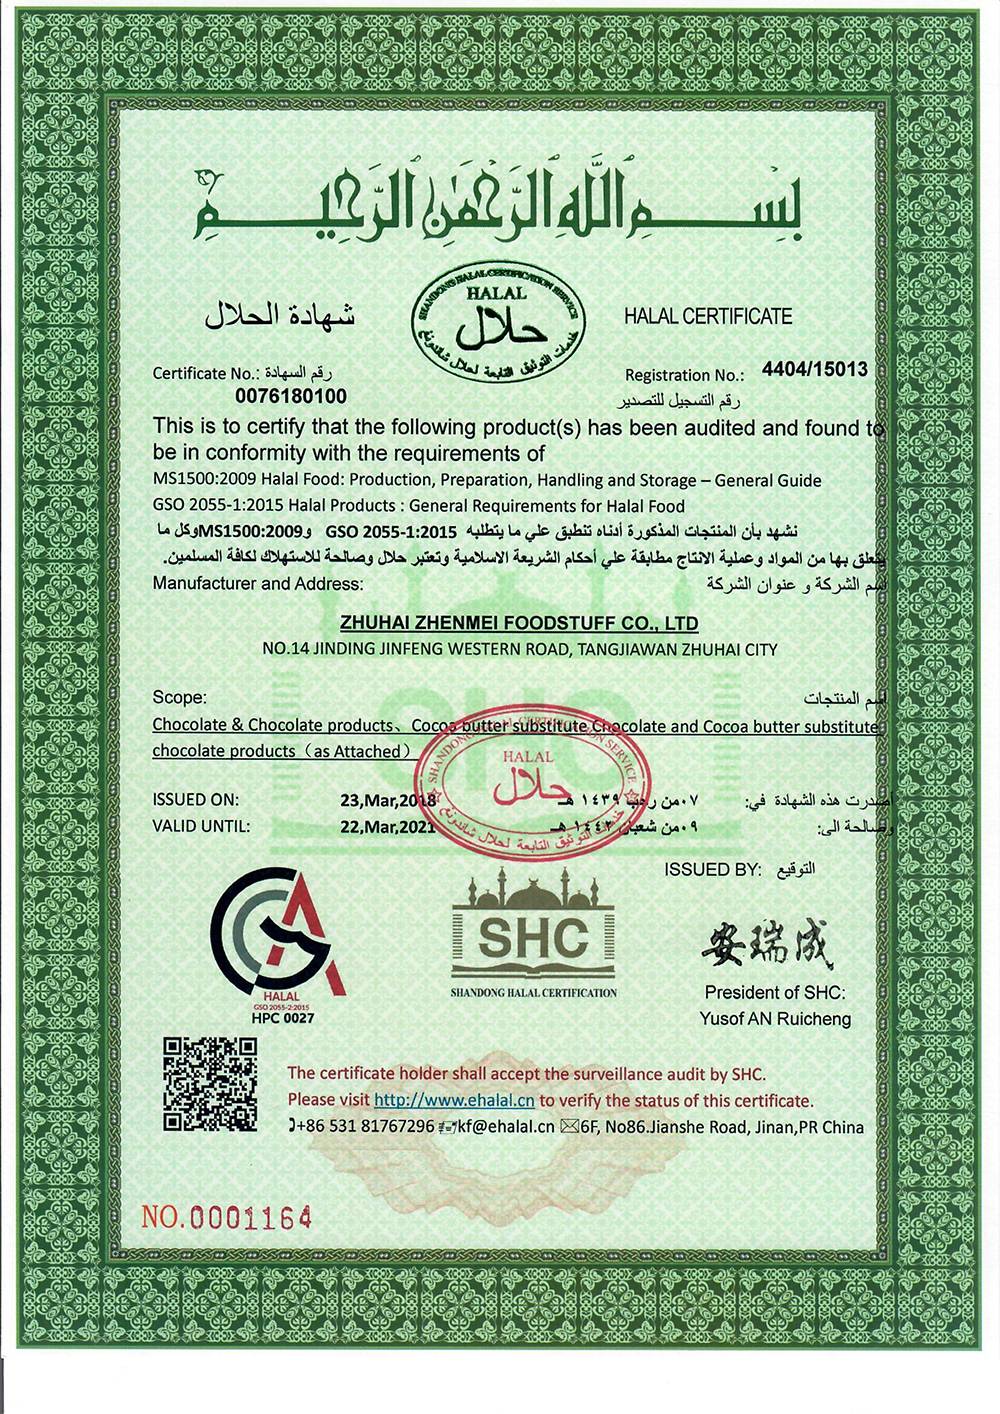 HALAL certificate 